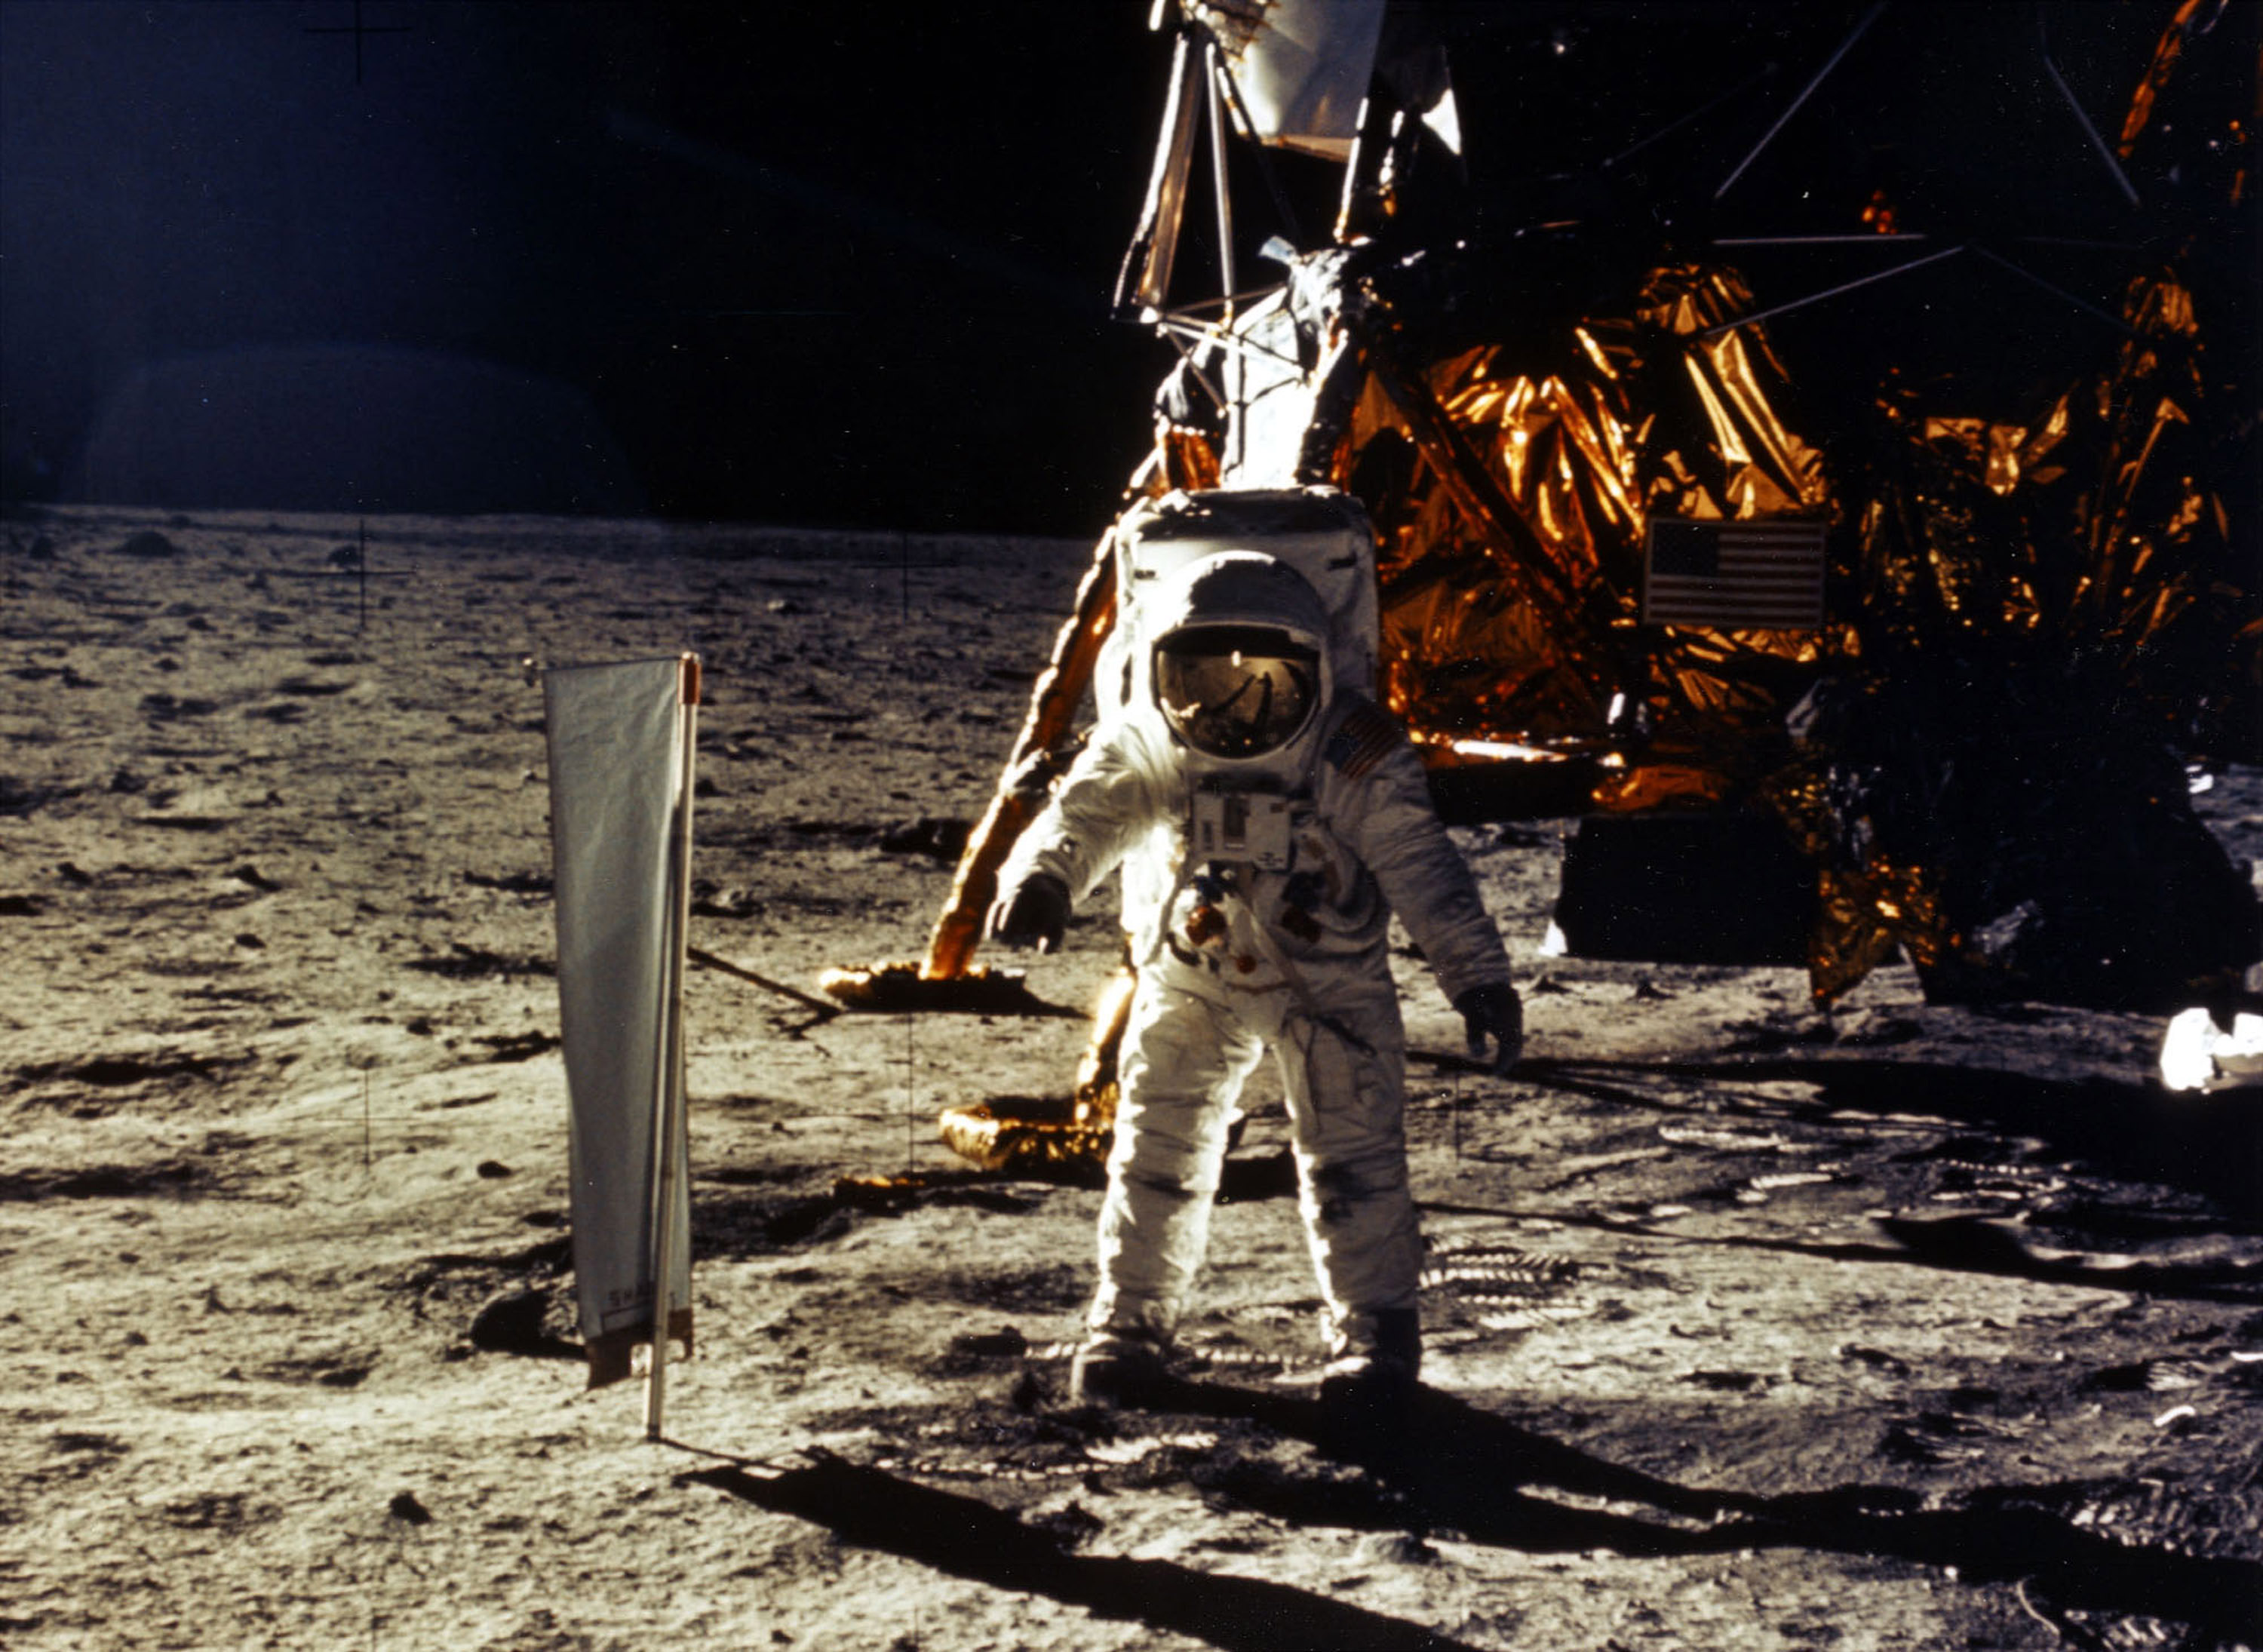 Apollo 11 1969. The astronauts on the moon